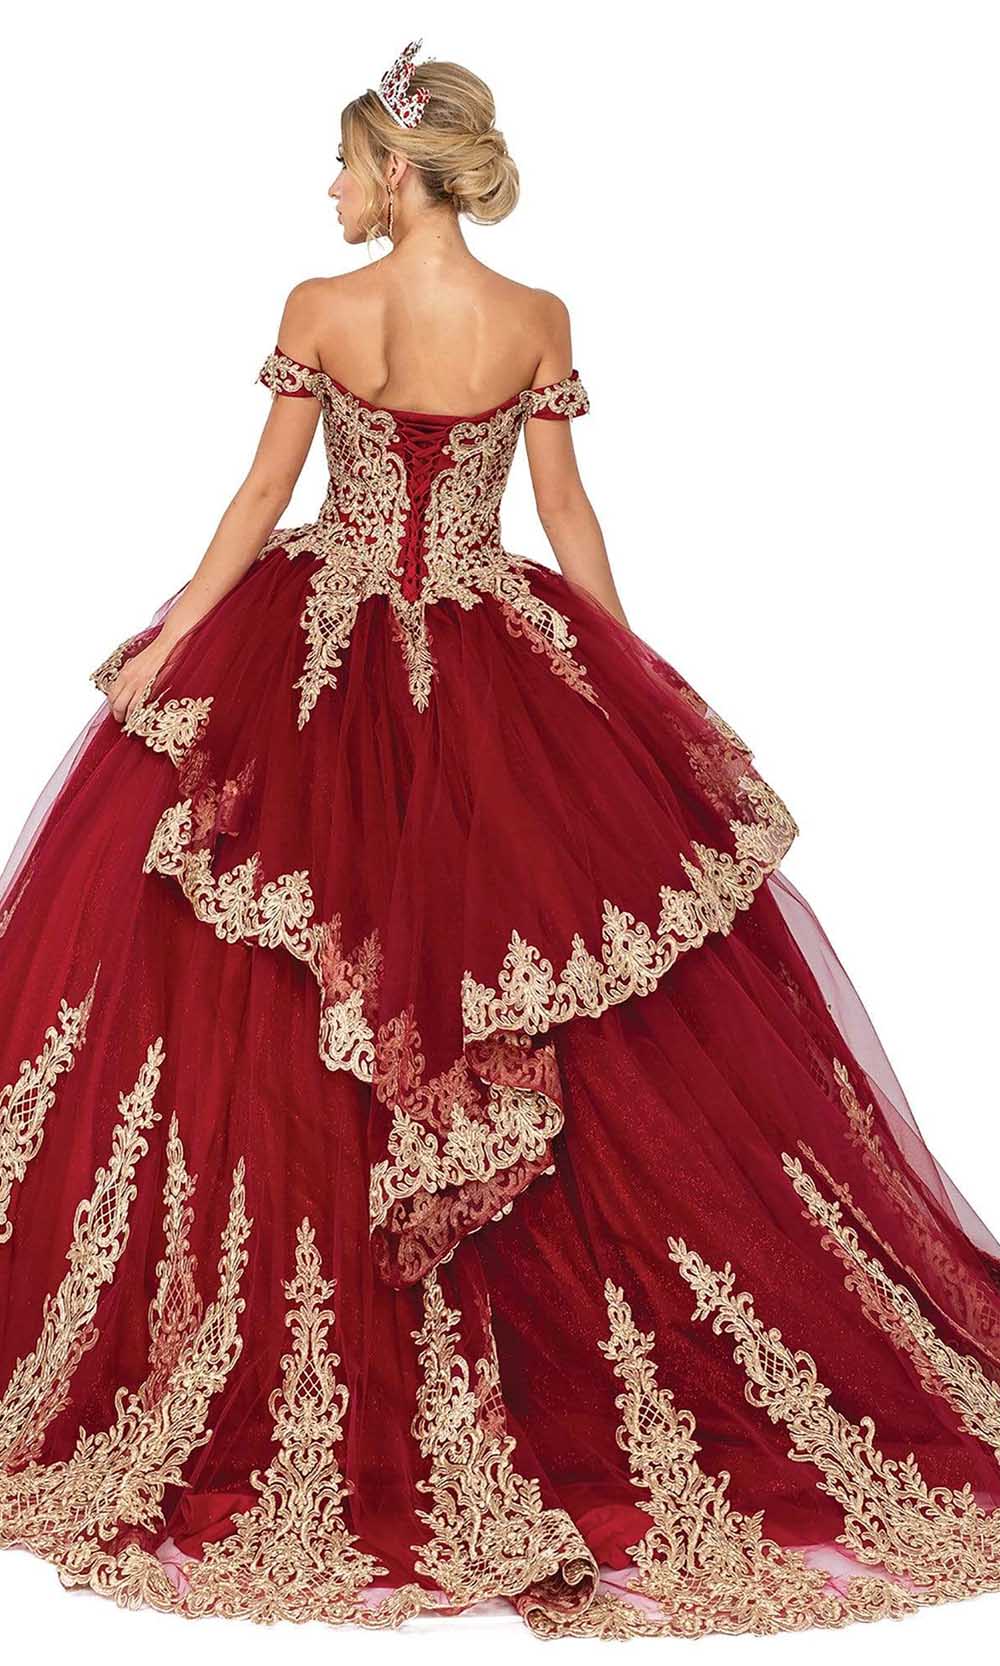 Dancing Queen - 1571 Off Shoulder Applique Ballgown Special Occasion Dress